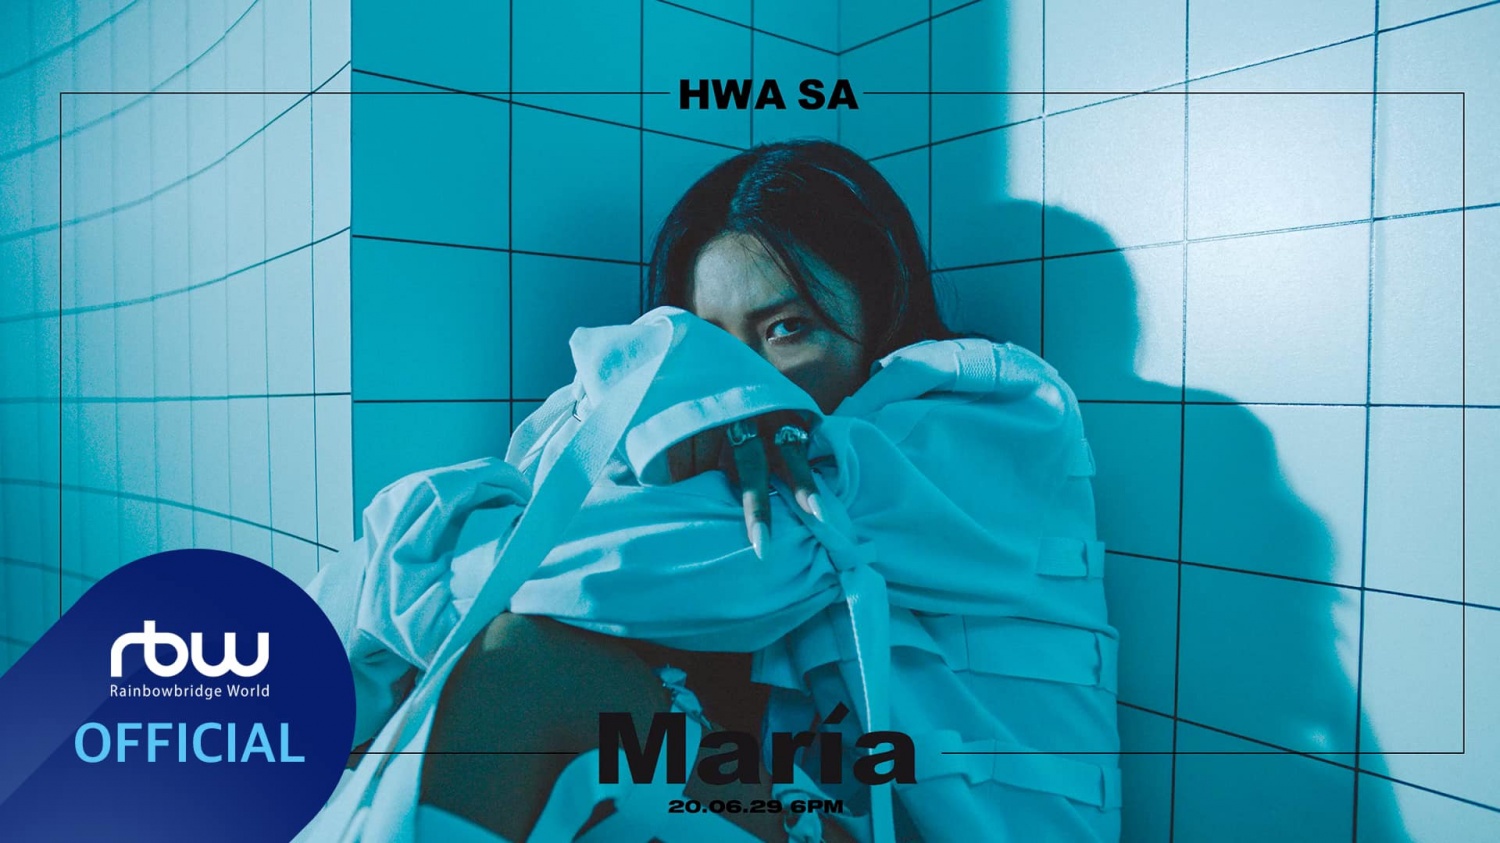 'Comeback D-5' Mamamoo Hwasa, 'Maria' teaser video released, Intense impact